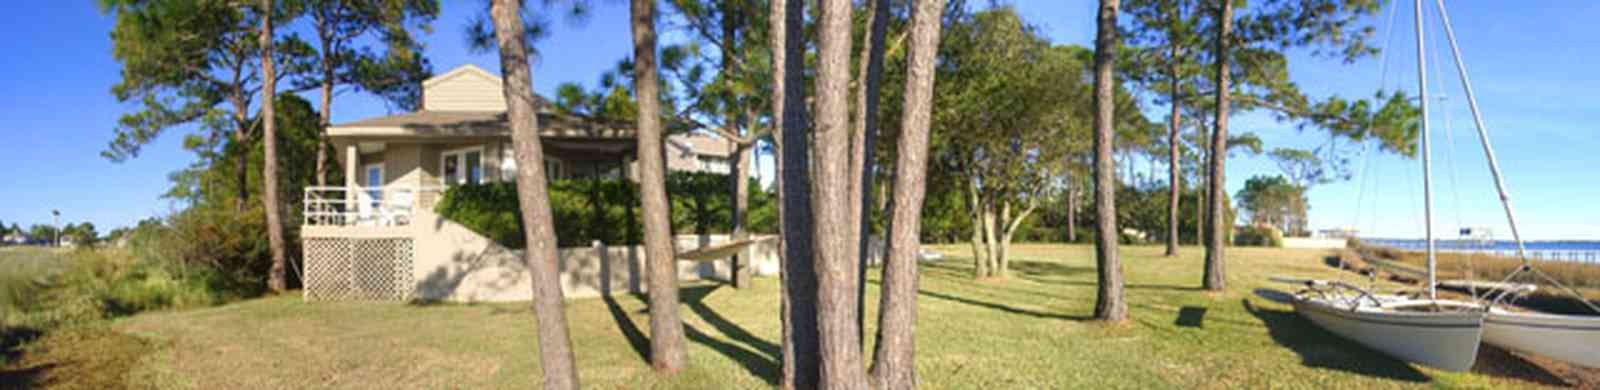 Gulf-Breeze:-Ceylon-Drive_03.jpg:  tiger point subdivision, santa rosa sound, pine trees, pool house